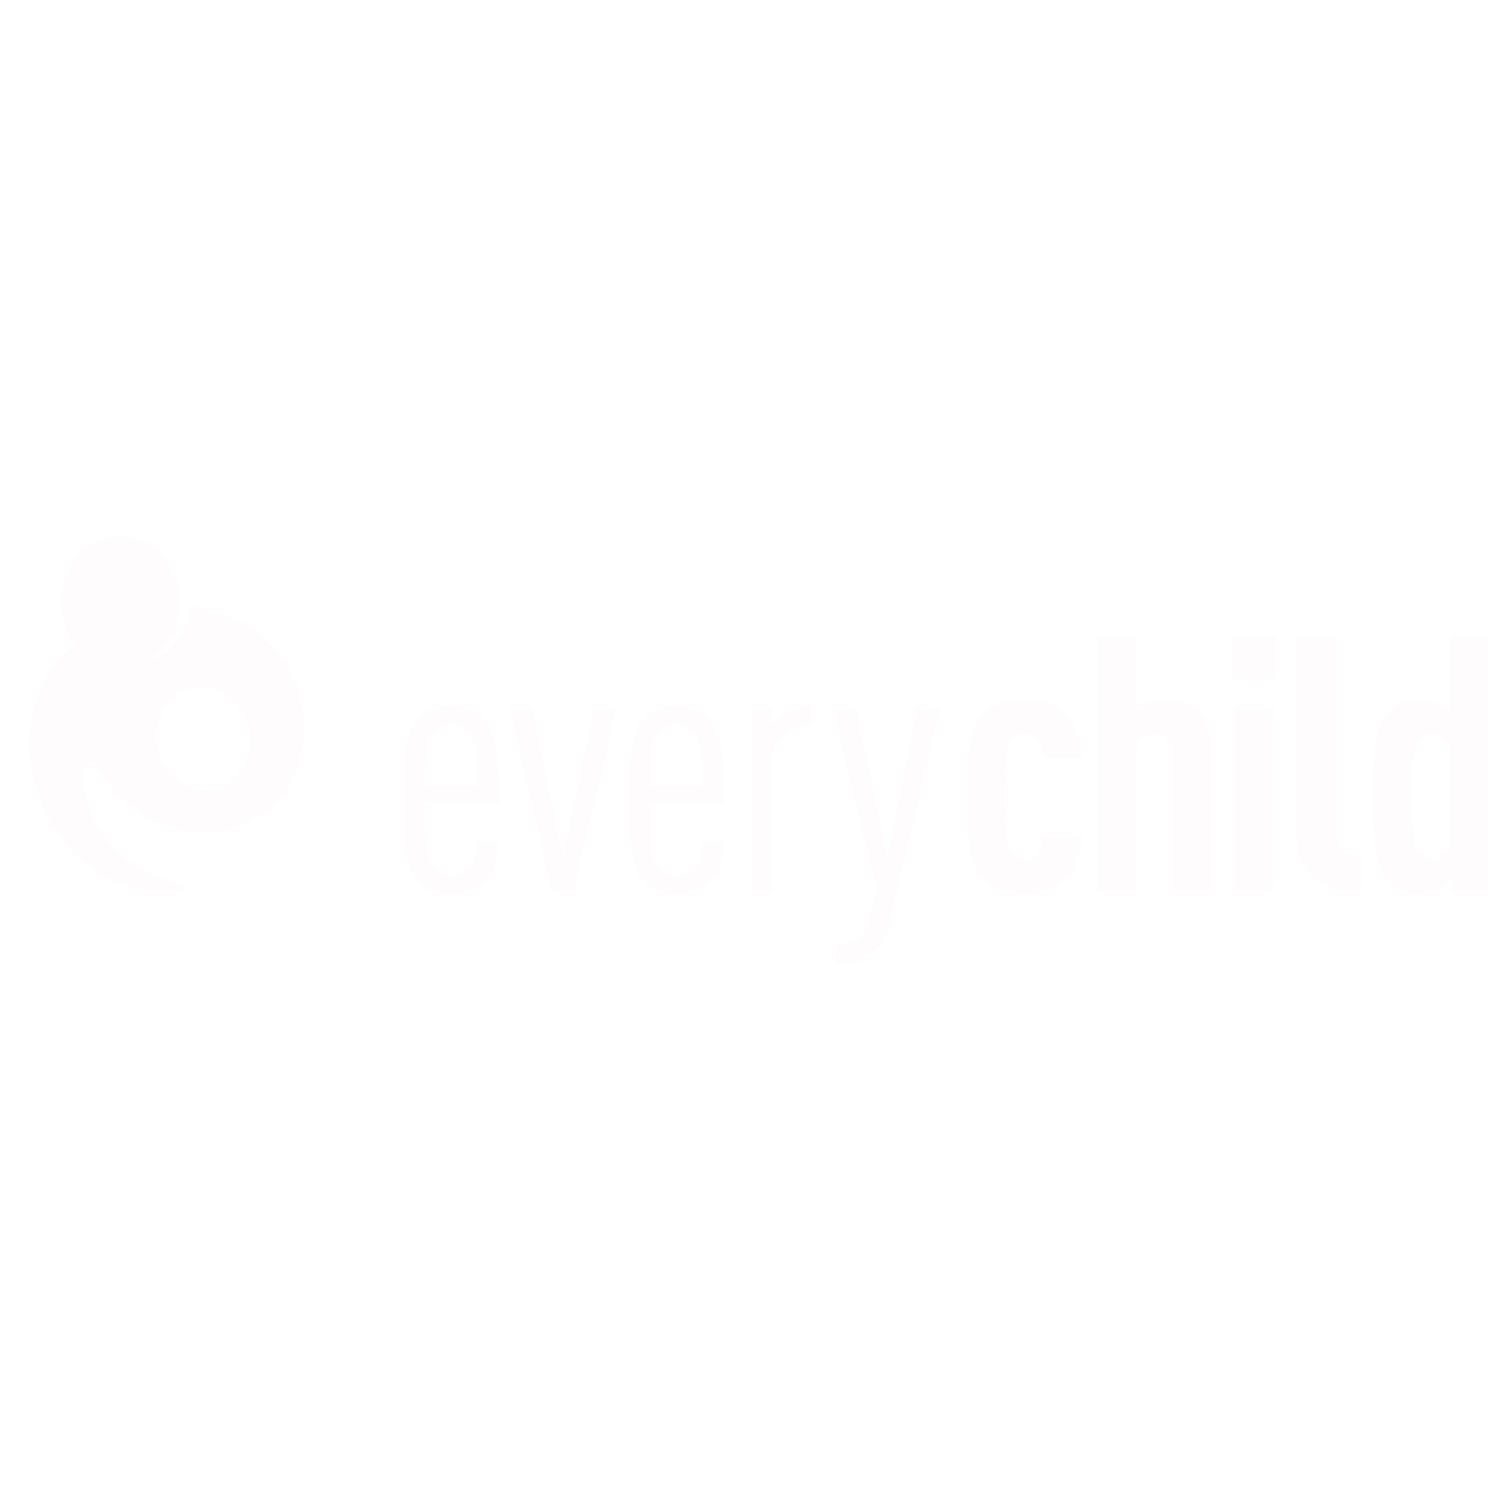 Every Child Inc.